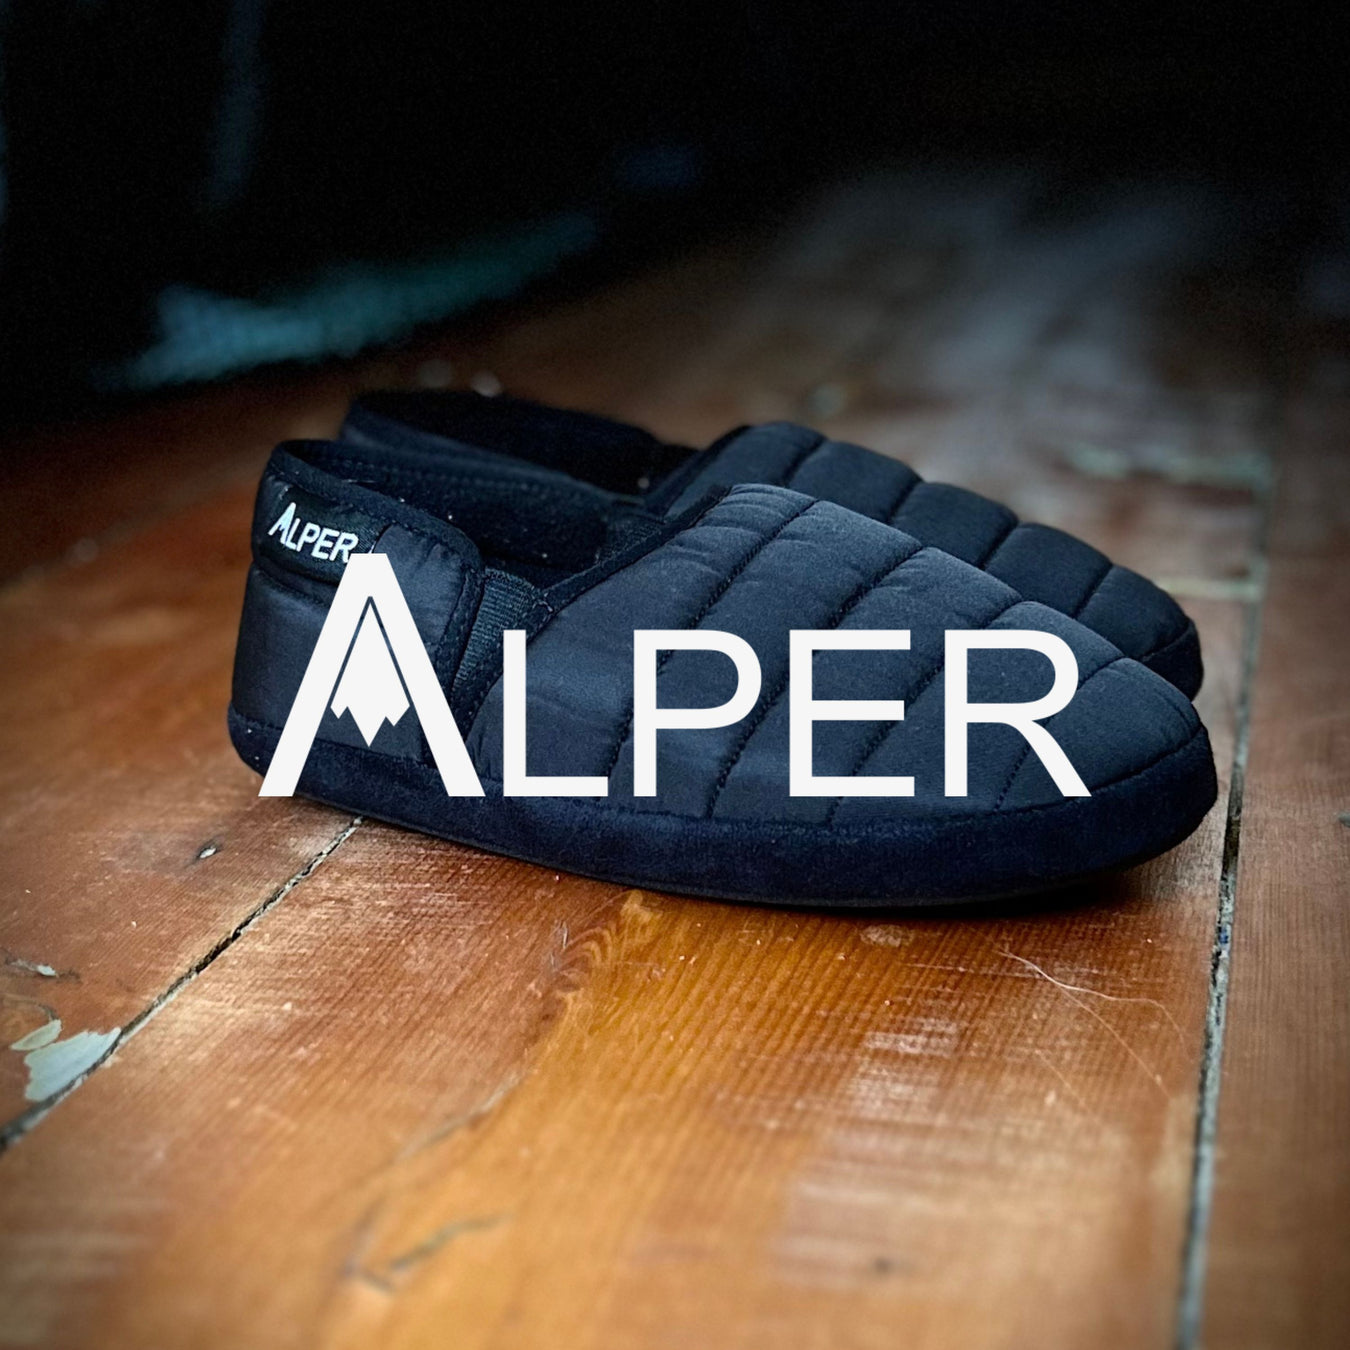 ALPER